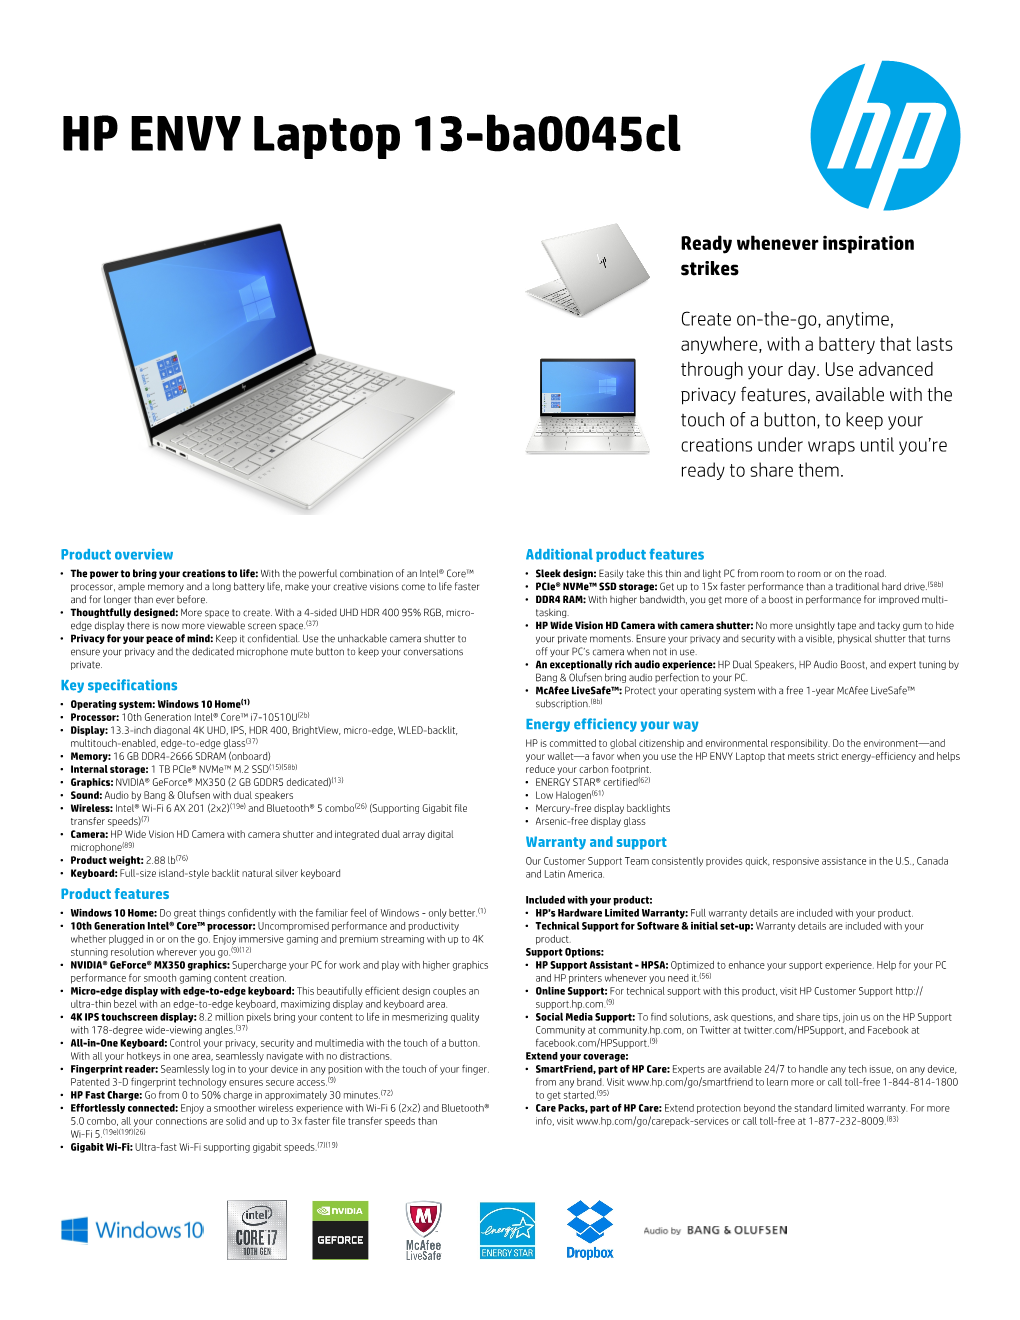 HP ENVY Laptop 13-Ba0045cl